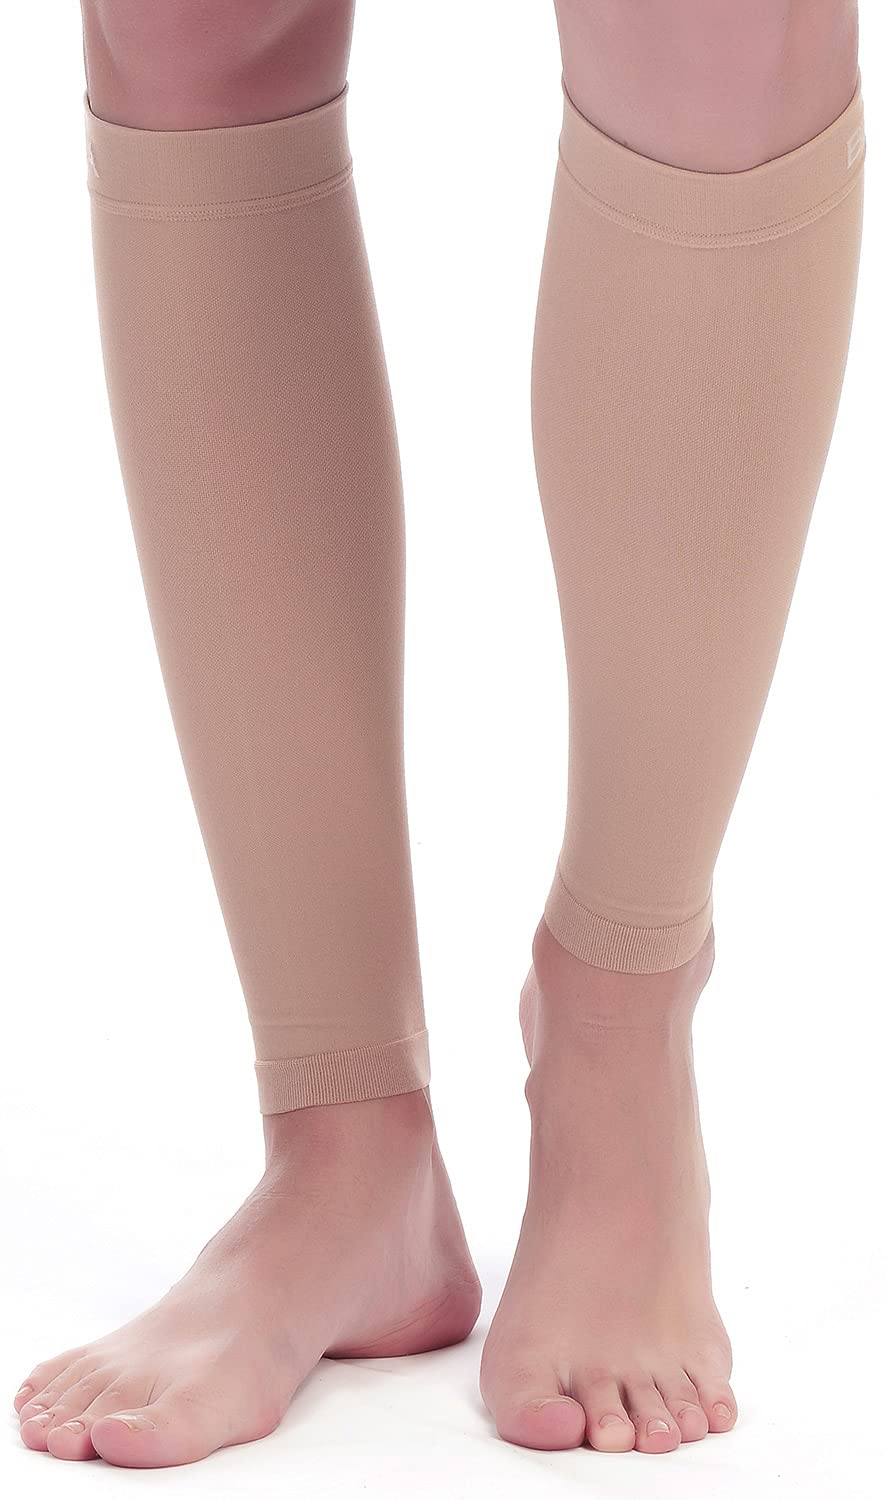 Footless Support Pantyhose for Women 20-30mmHg Varicose Veins - Beige,  Medium 